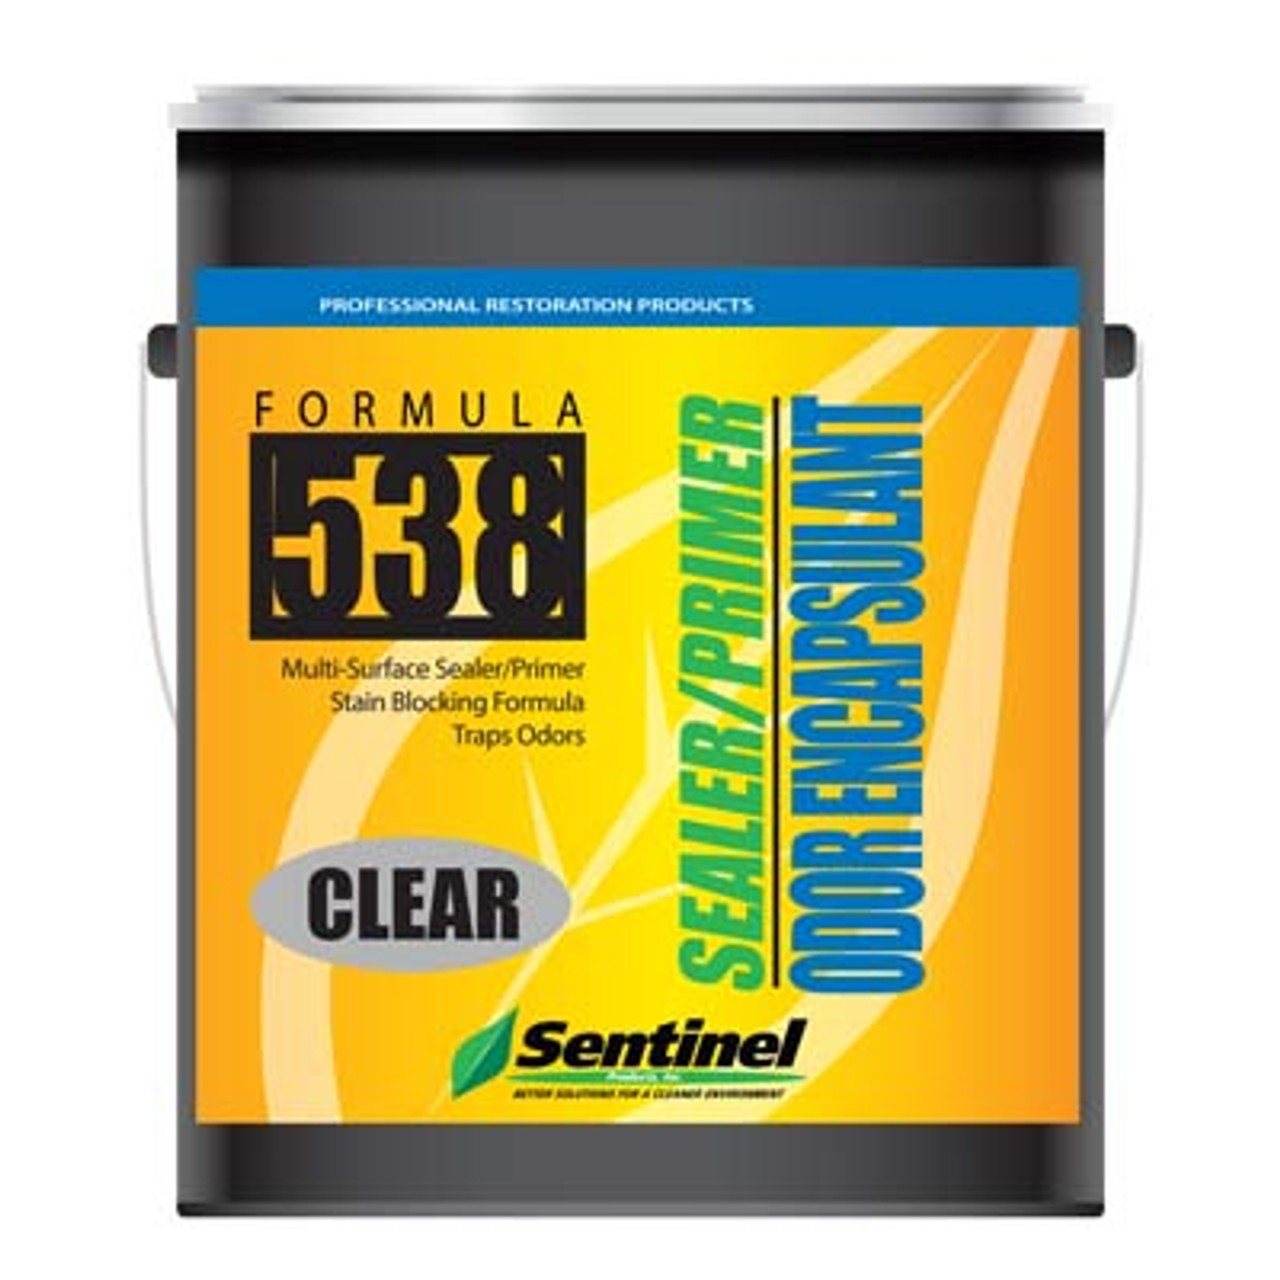 Sentinel 538 Smoke & Odor Encapsulant CLEAR